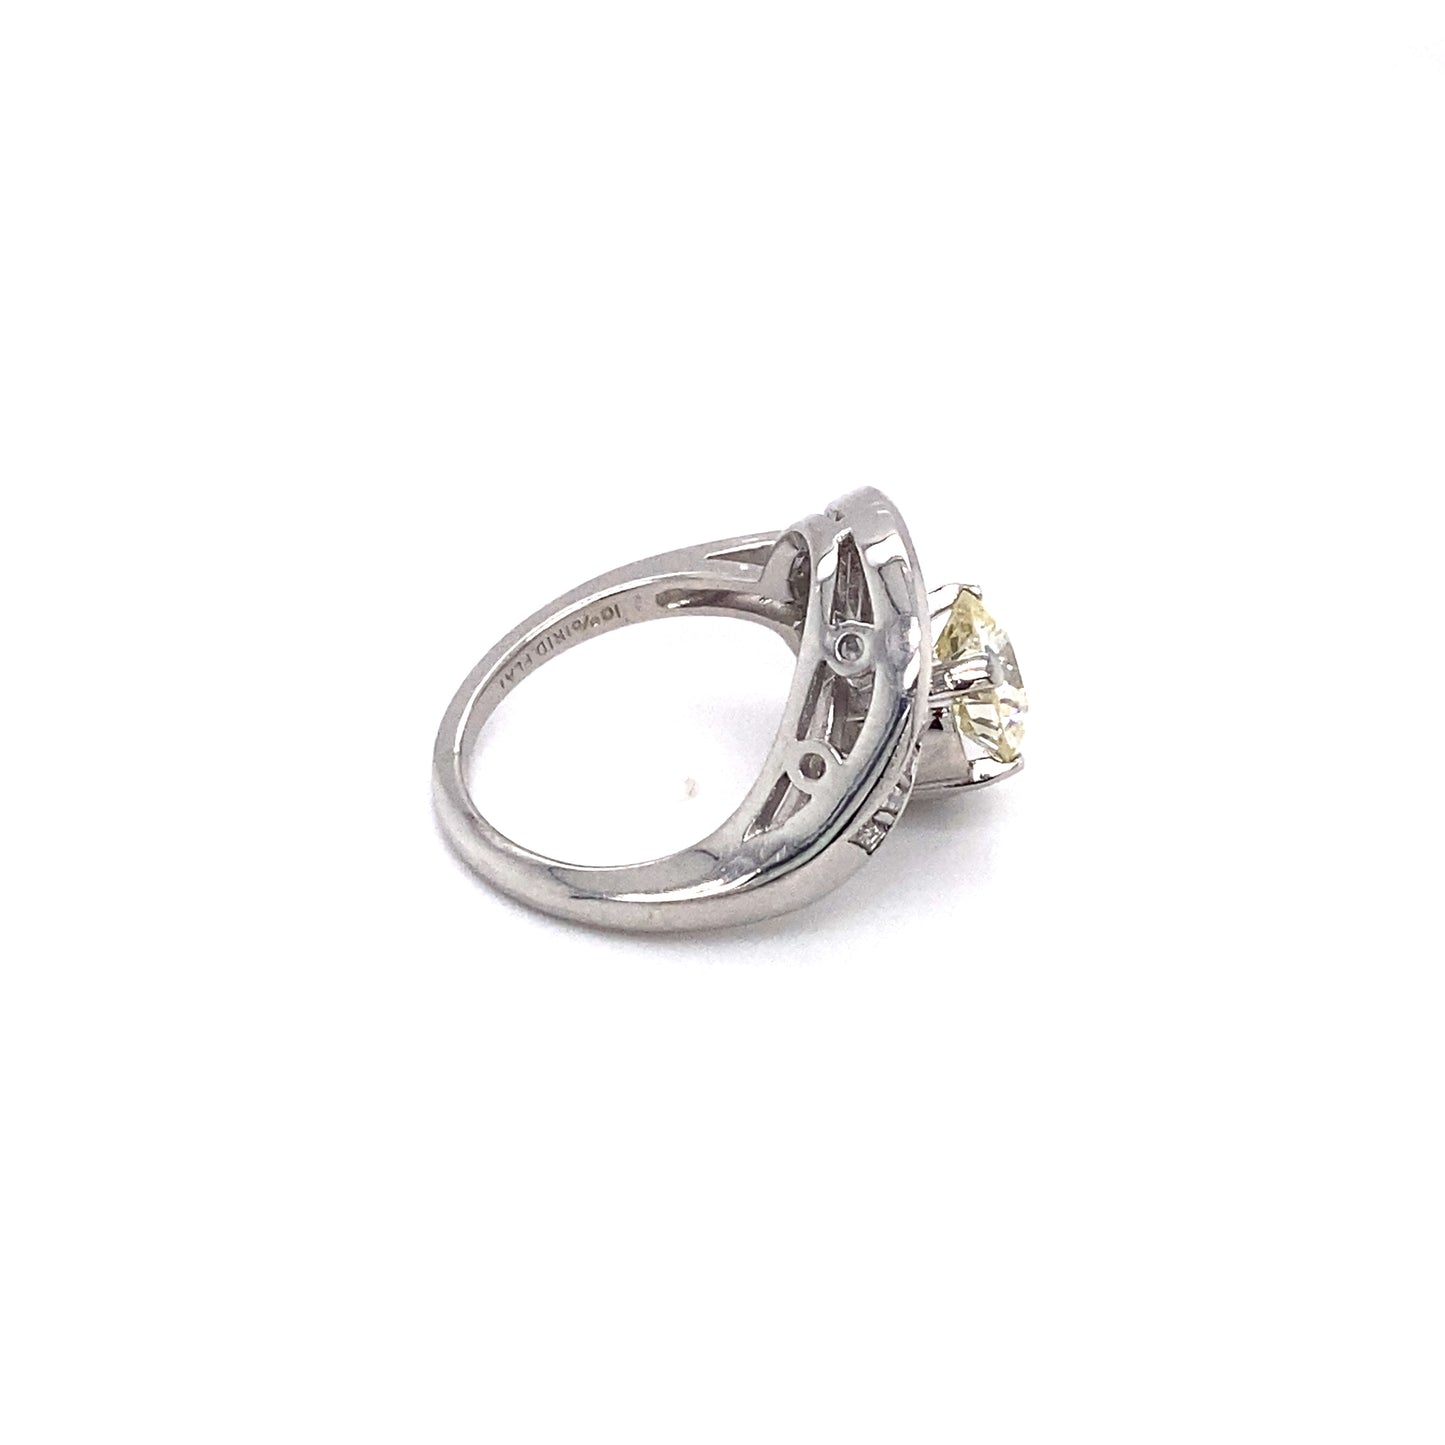 Circa 1950s 1.37 Carat Old European Cut Diamond Swirl Ring in Platinum